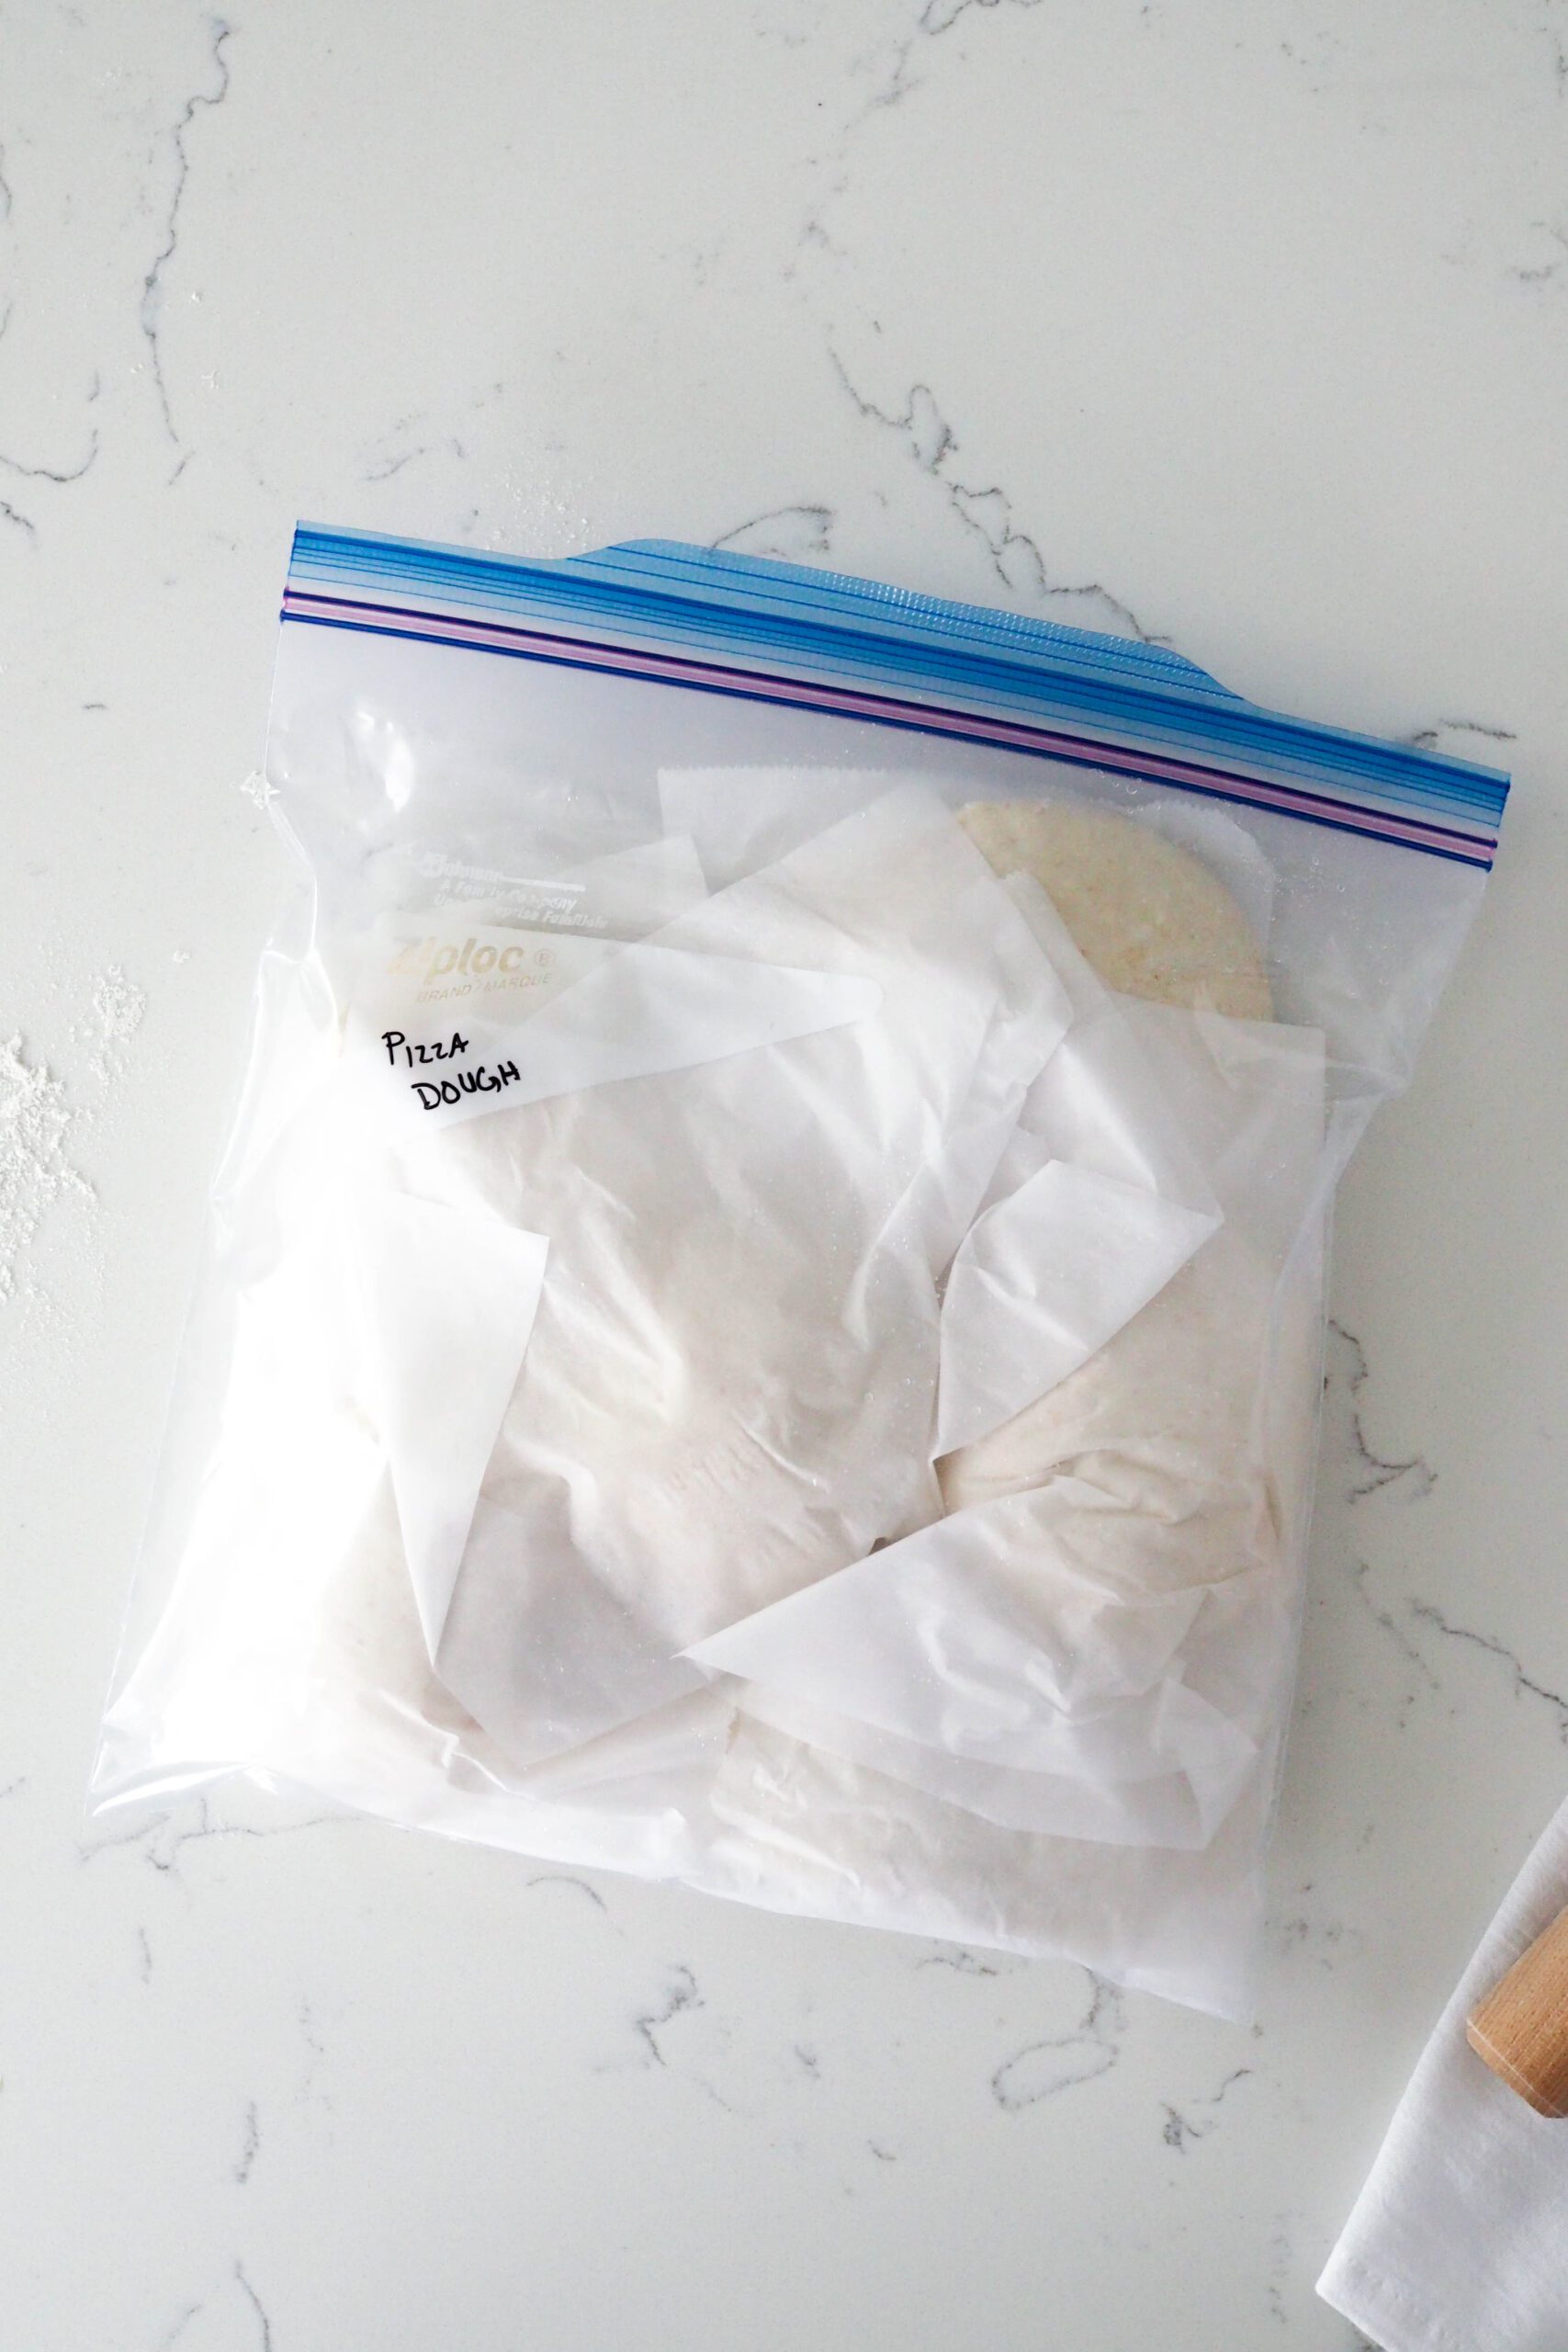 A gallon-sized freezer Ziploc bag has balls of dough wrapped in parchment inside it.